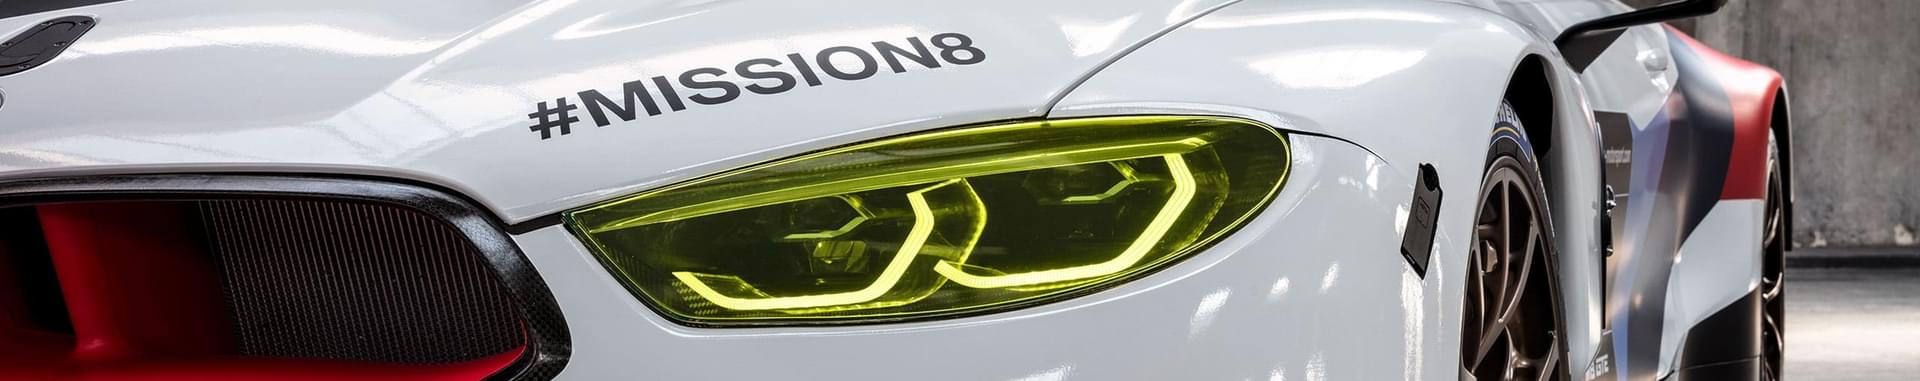 BMW Mission8 headlight closeup